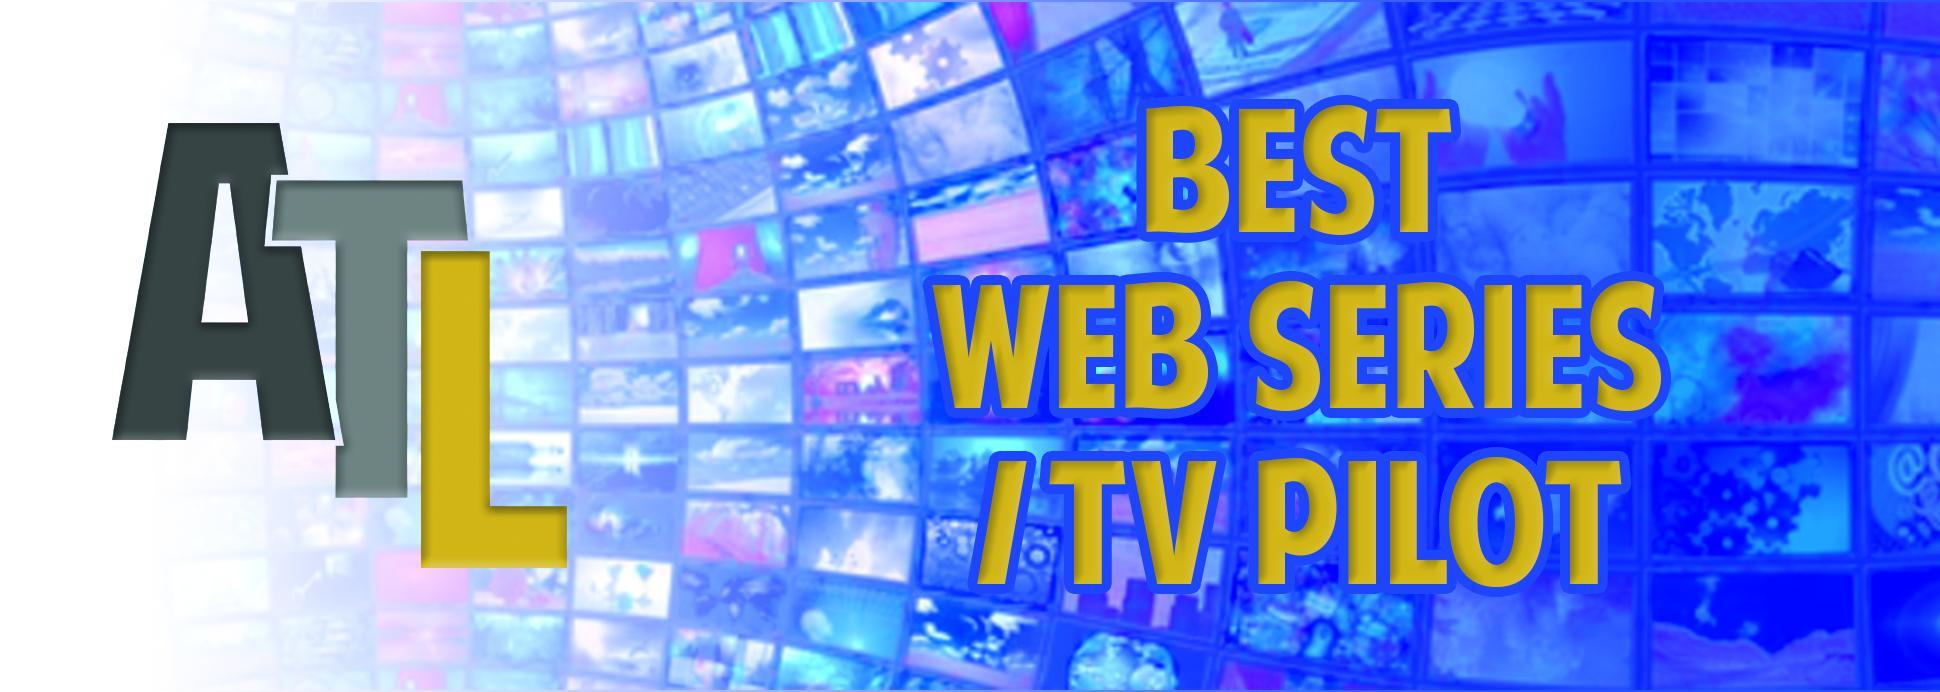 Best Web Series/TV Pilot